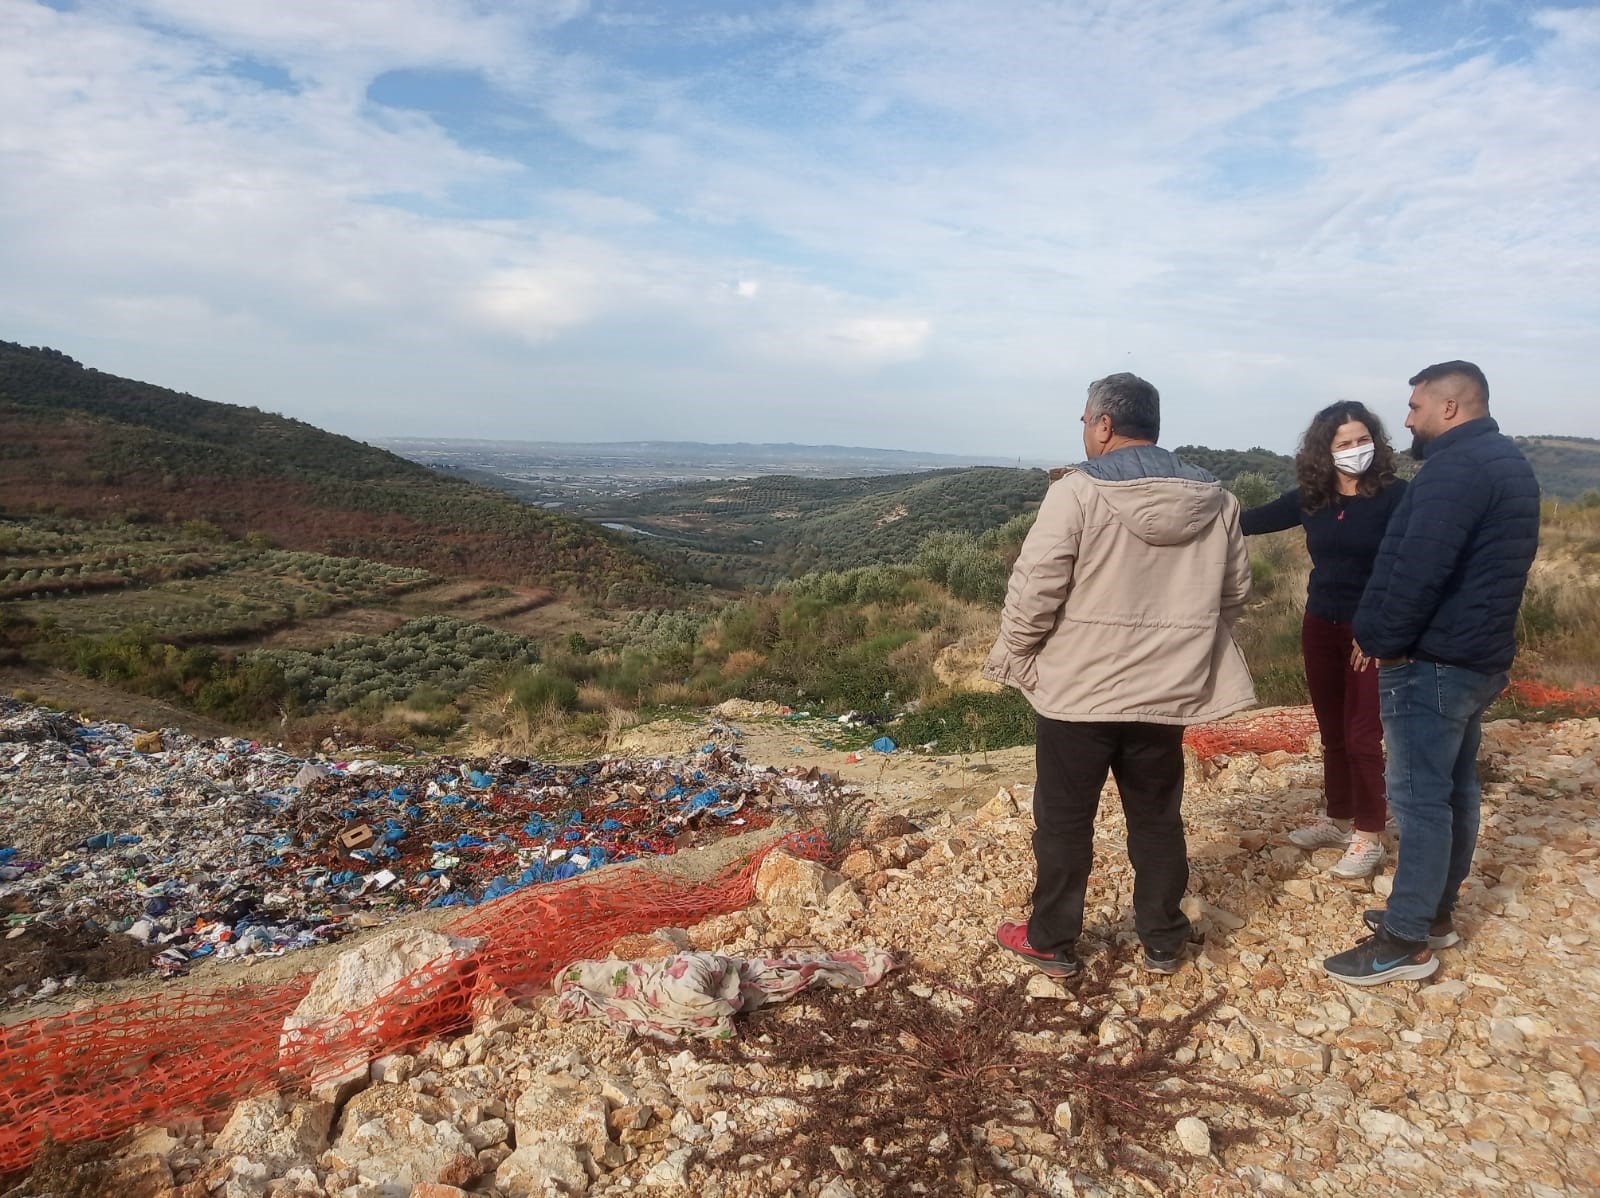 Berat Kucova and Dimal disposal sites